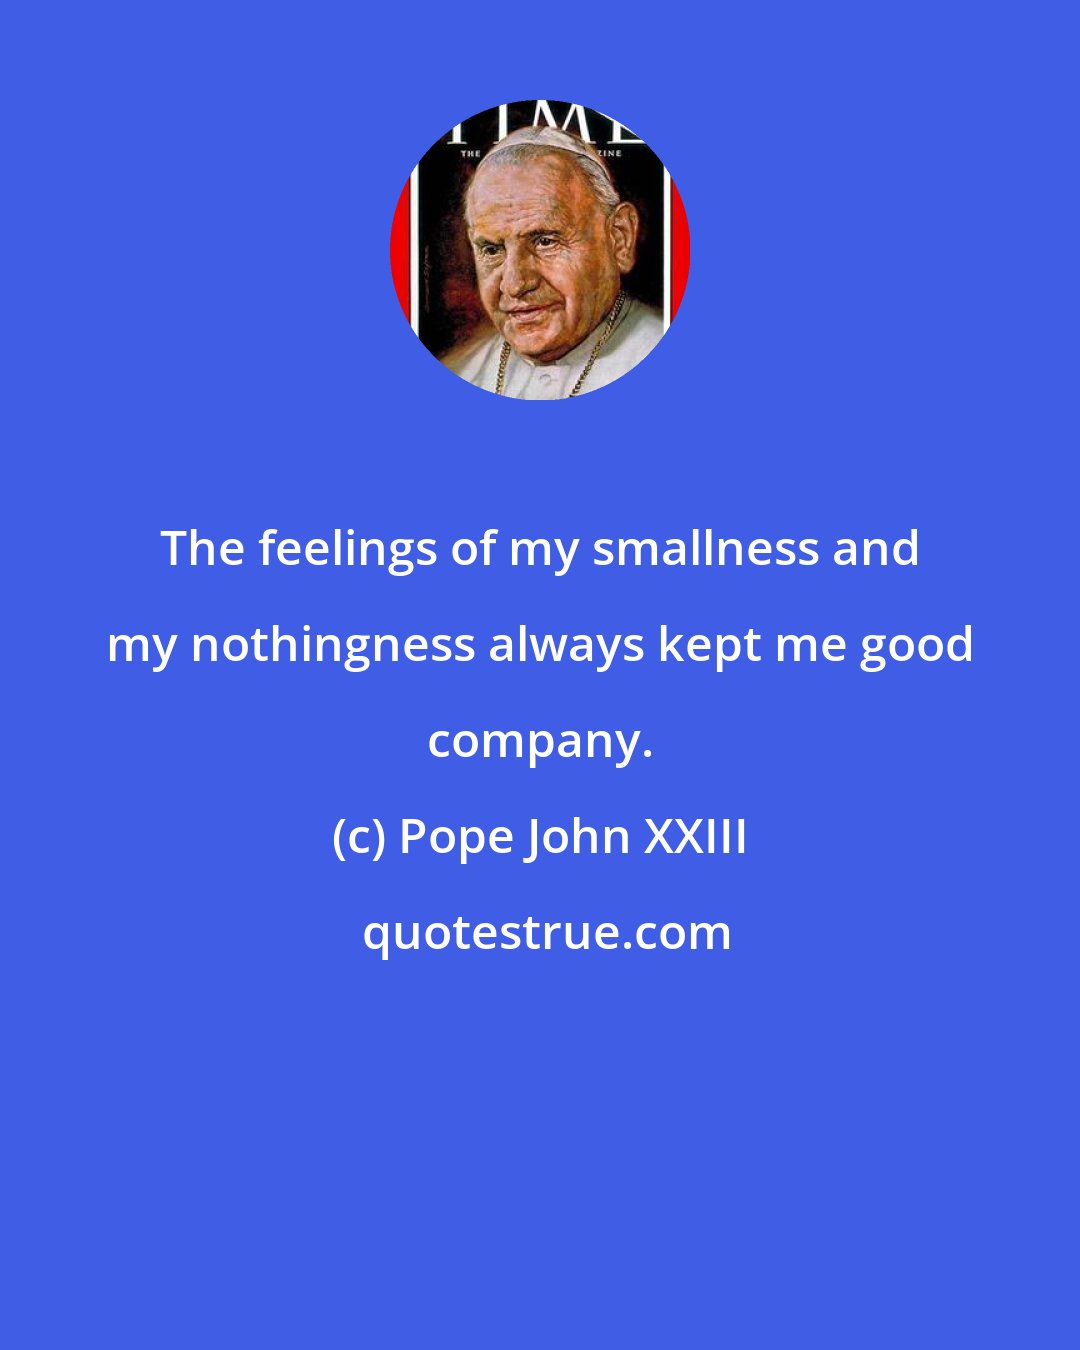 Pope John XXIII: The feelings of my smallness and my nothingness always kept me good company.